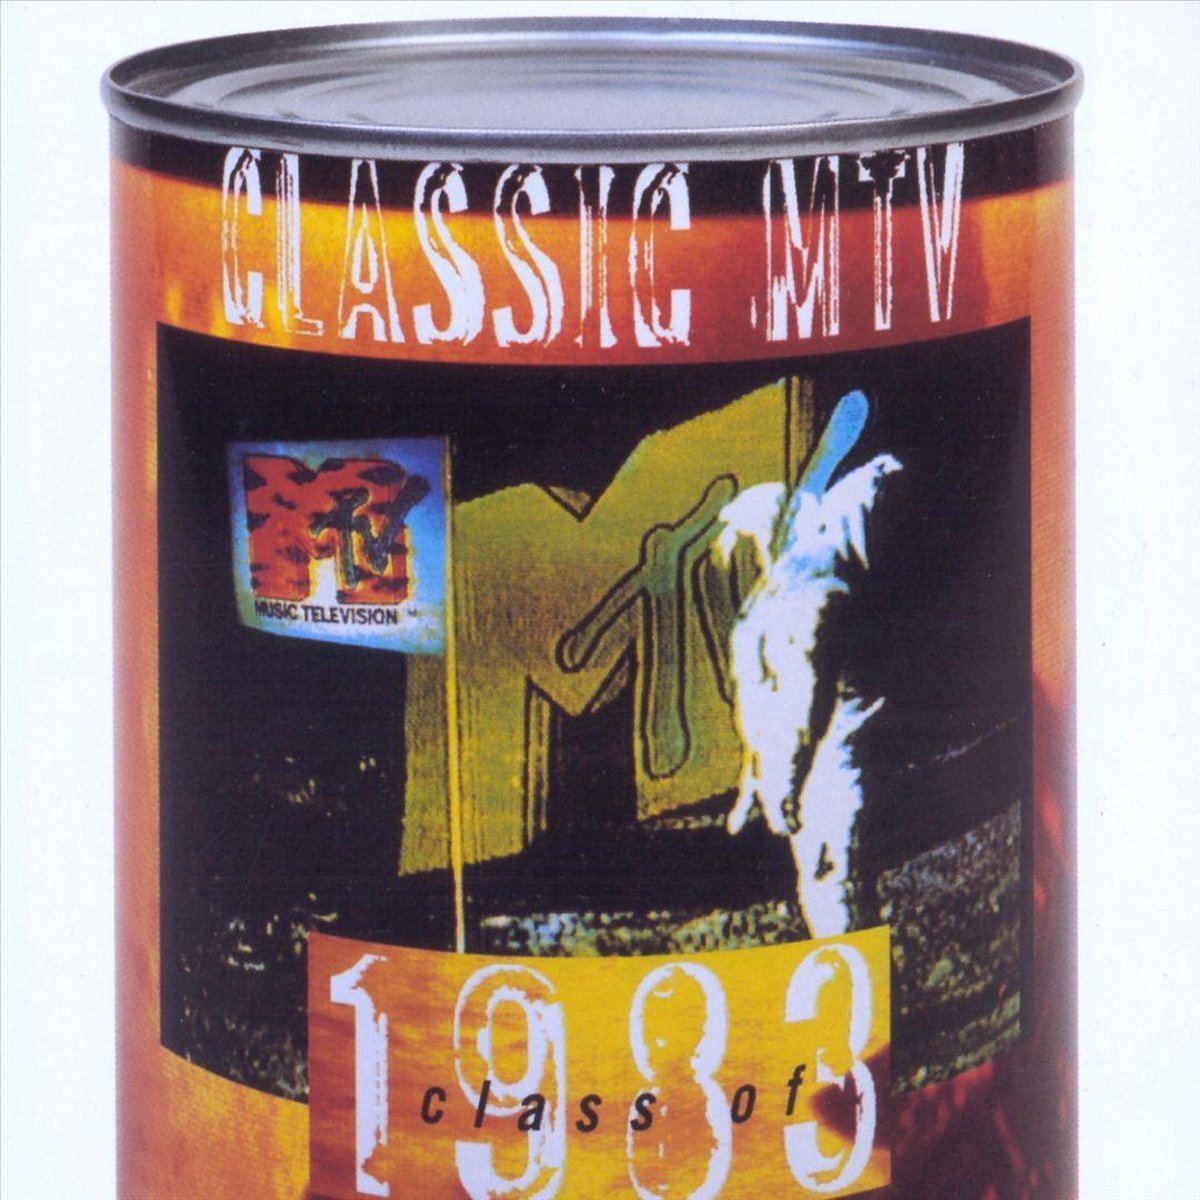 Classic MTV: Class Of 1983 - various artists